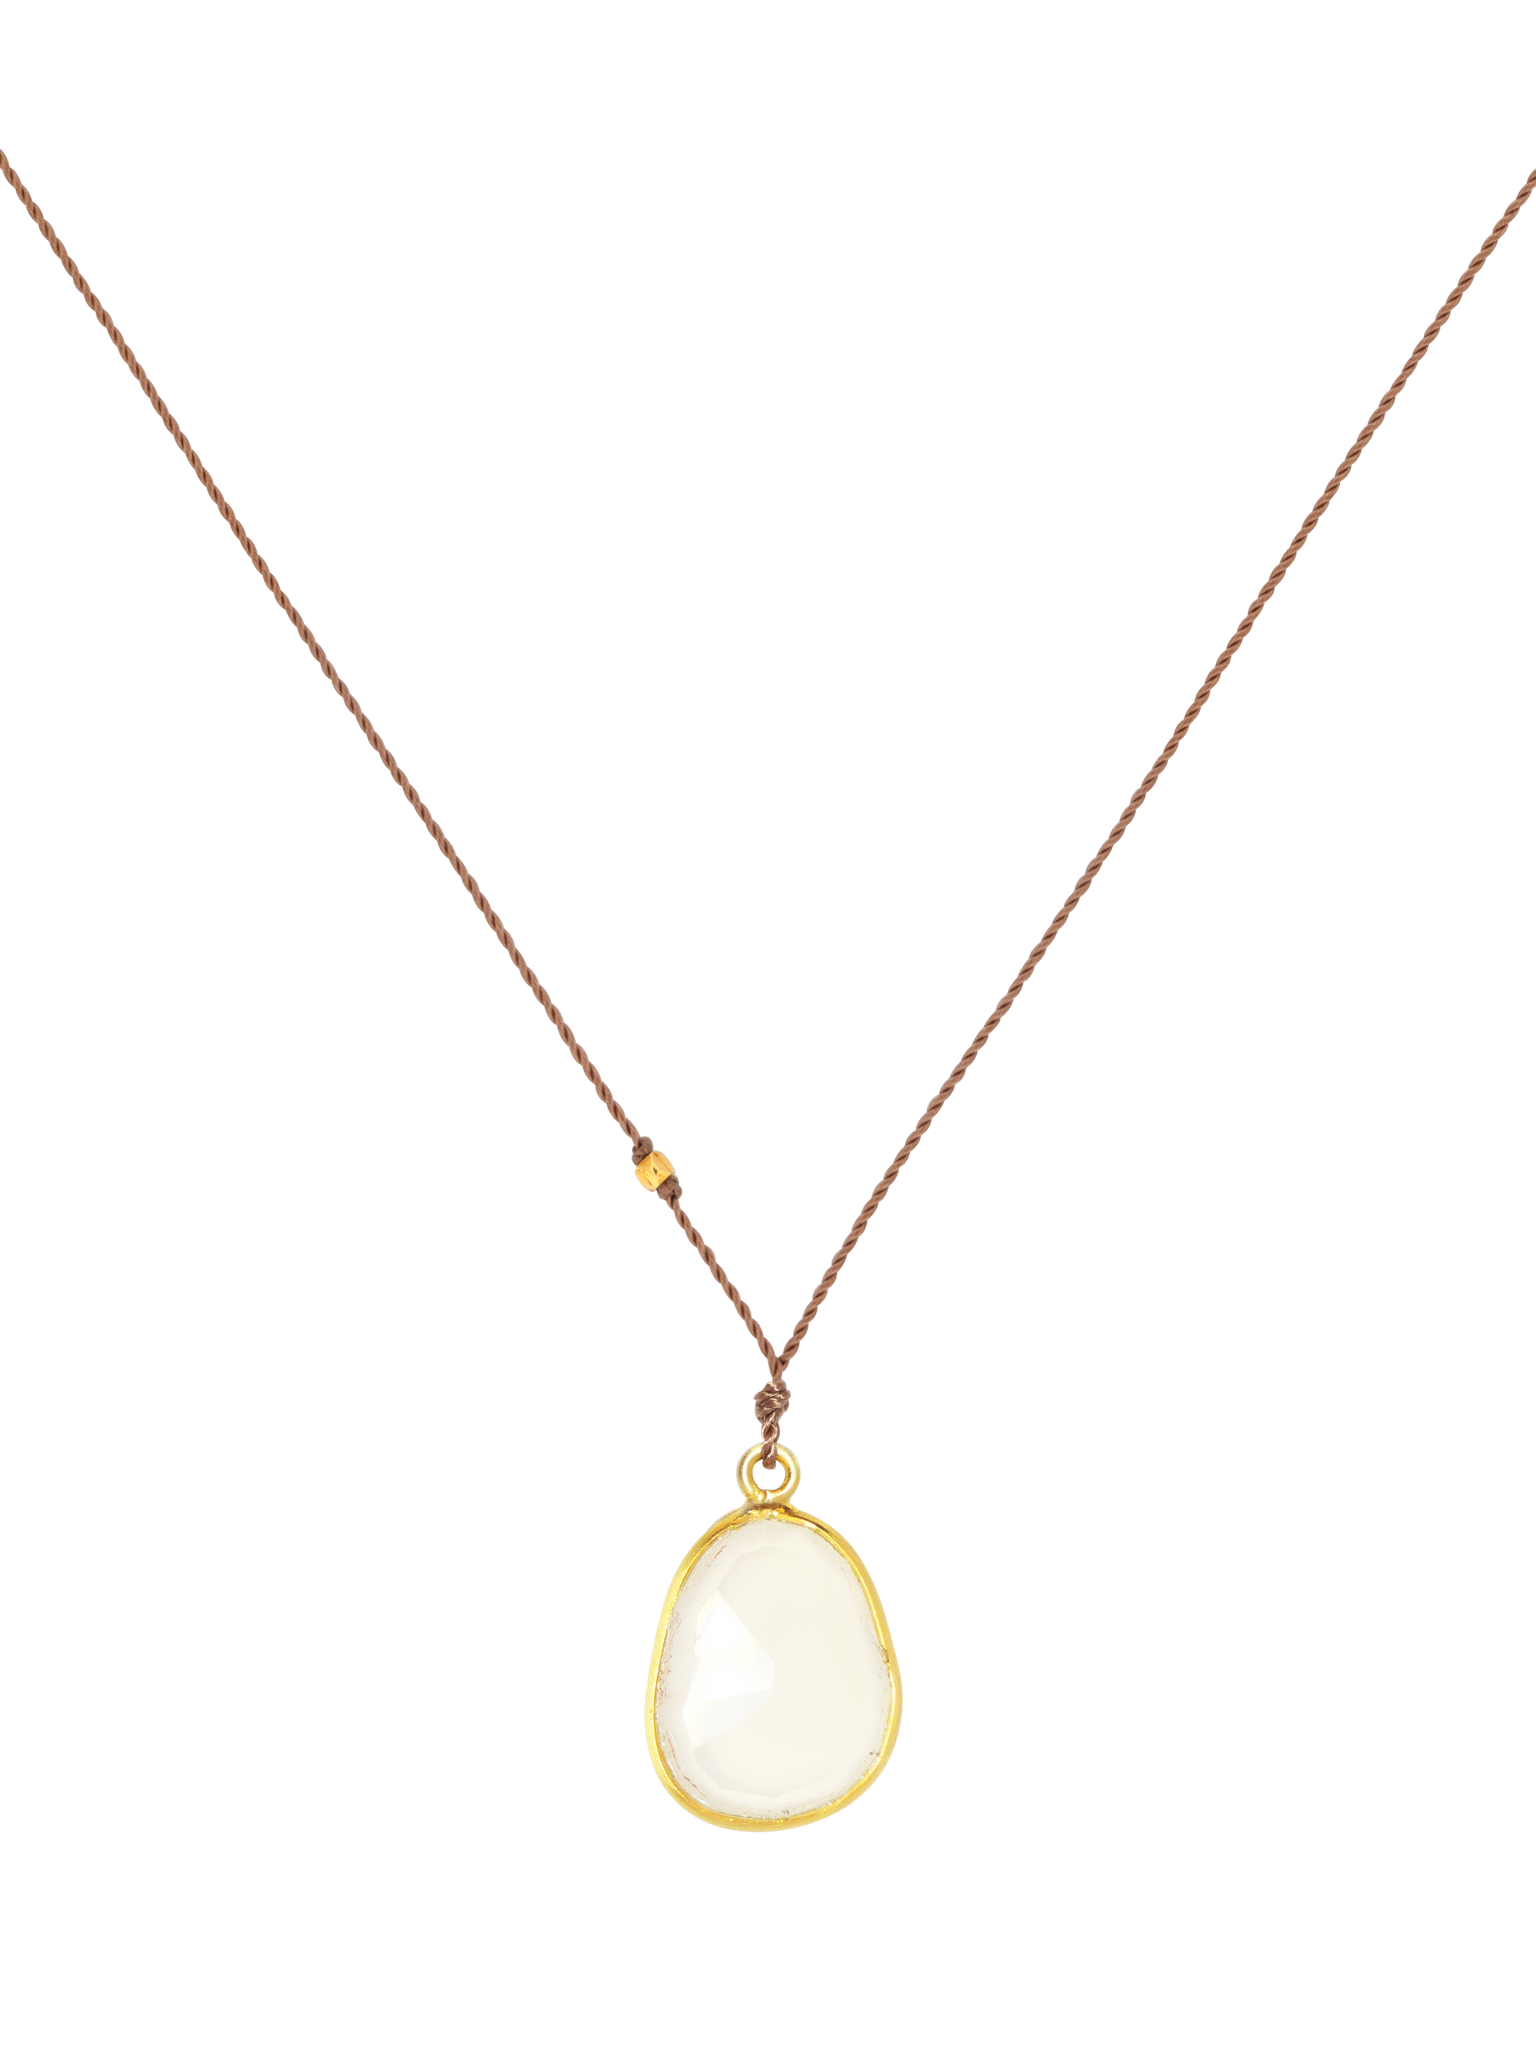 White chalcedony pendant necklace